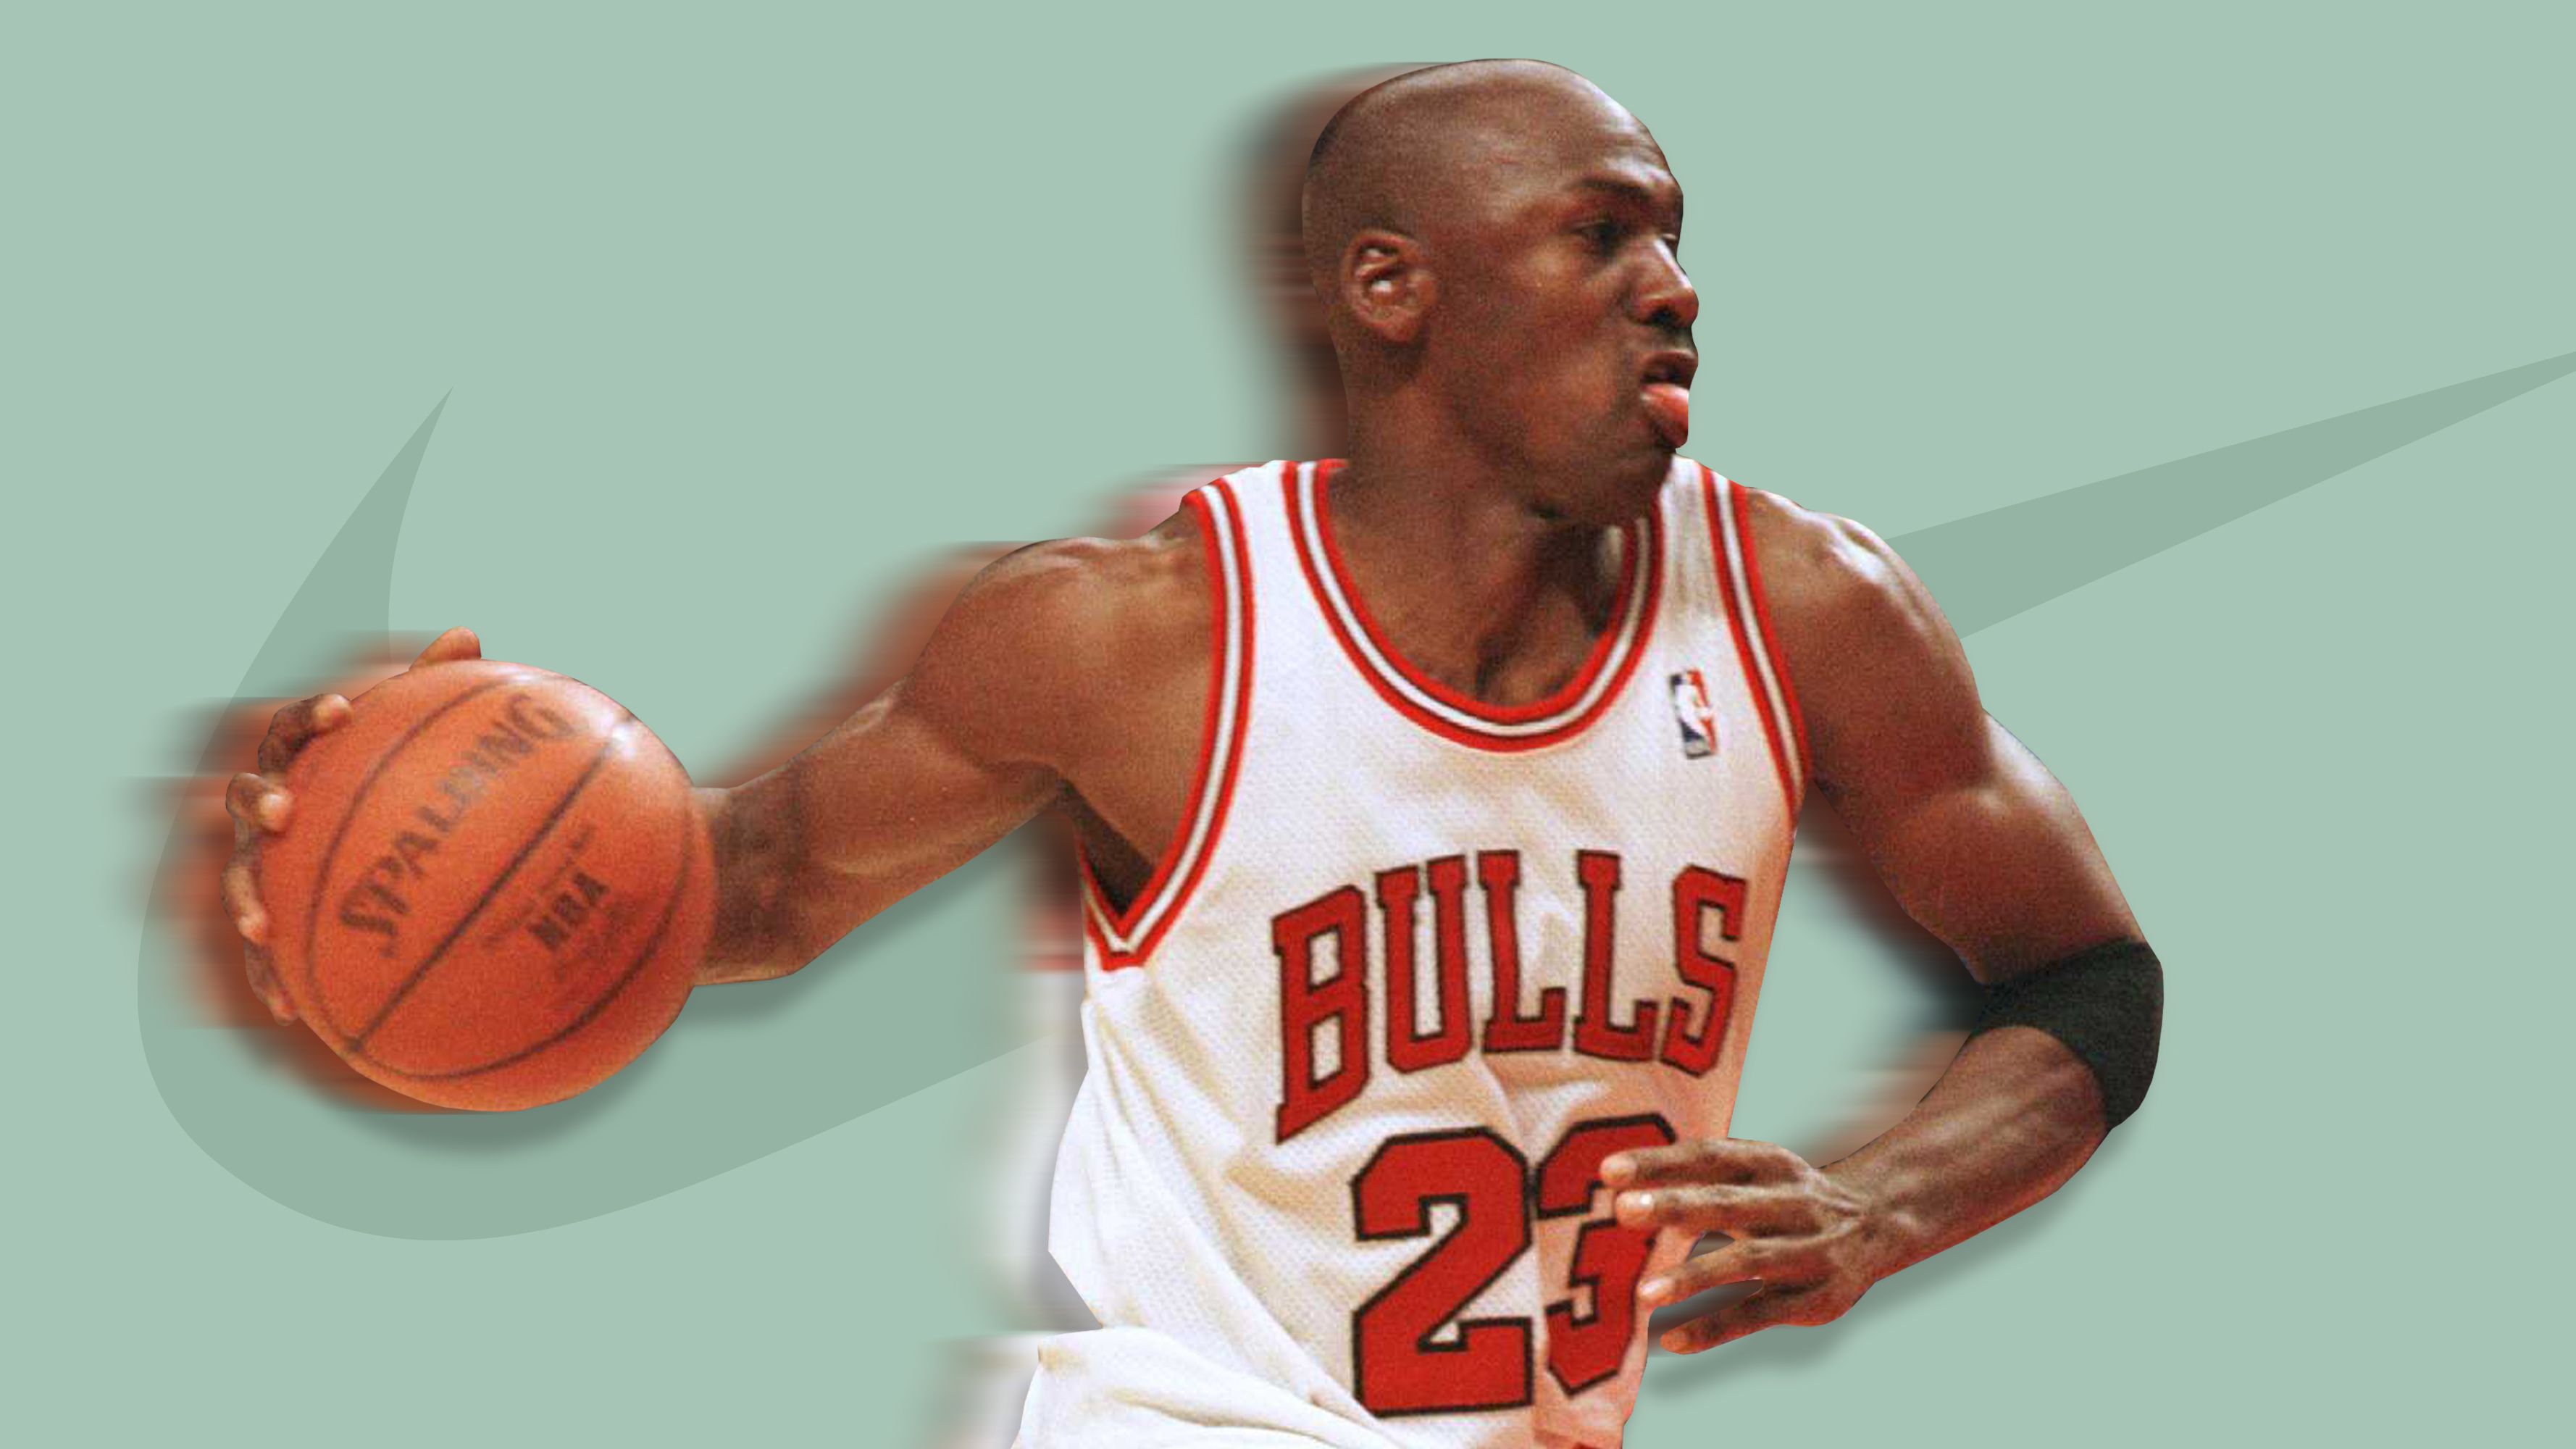 Chicago Bulls Jordan Nike Mens Size Small Icon Basketball Red